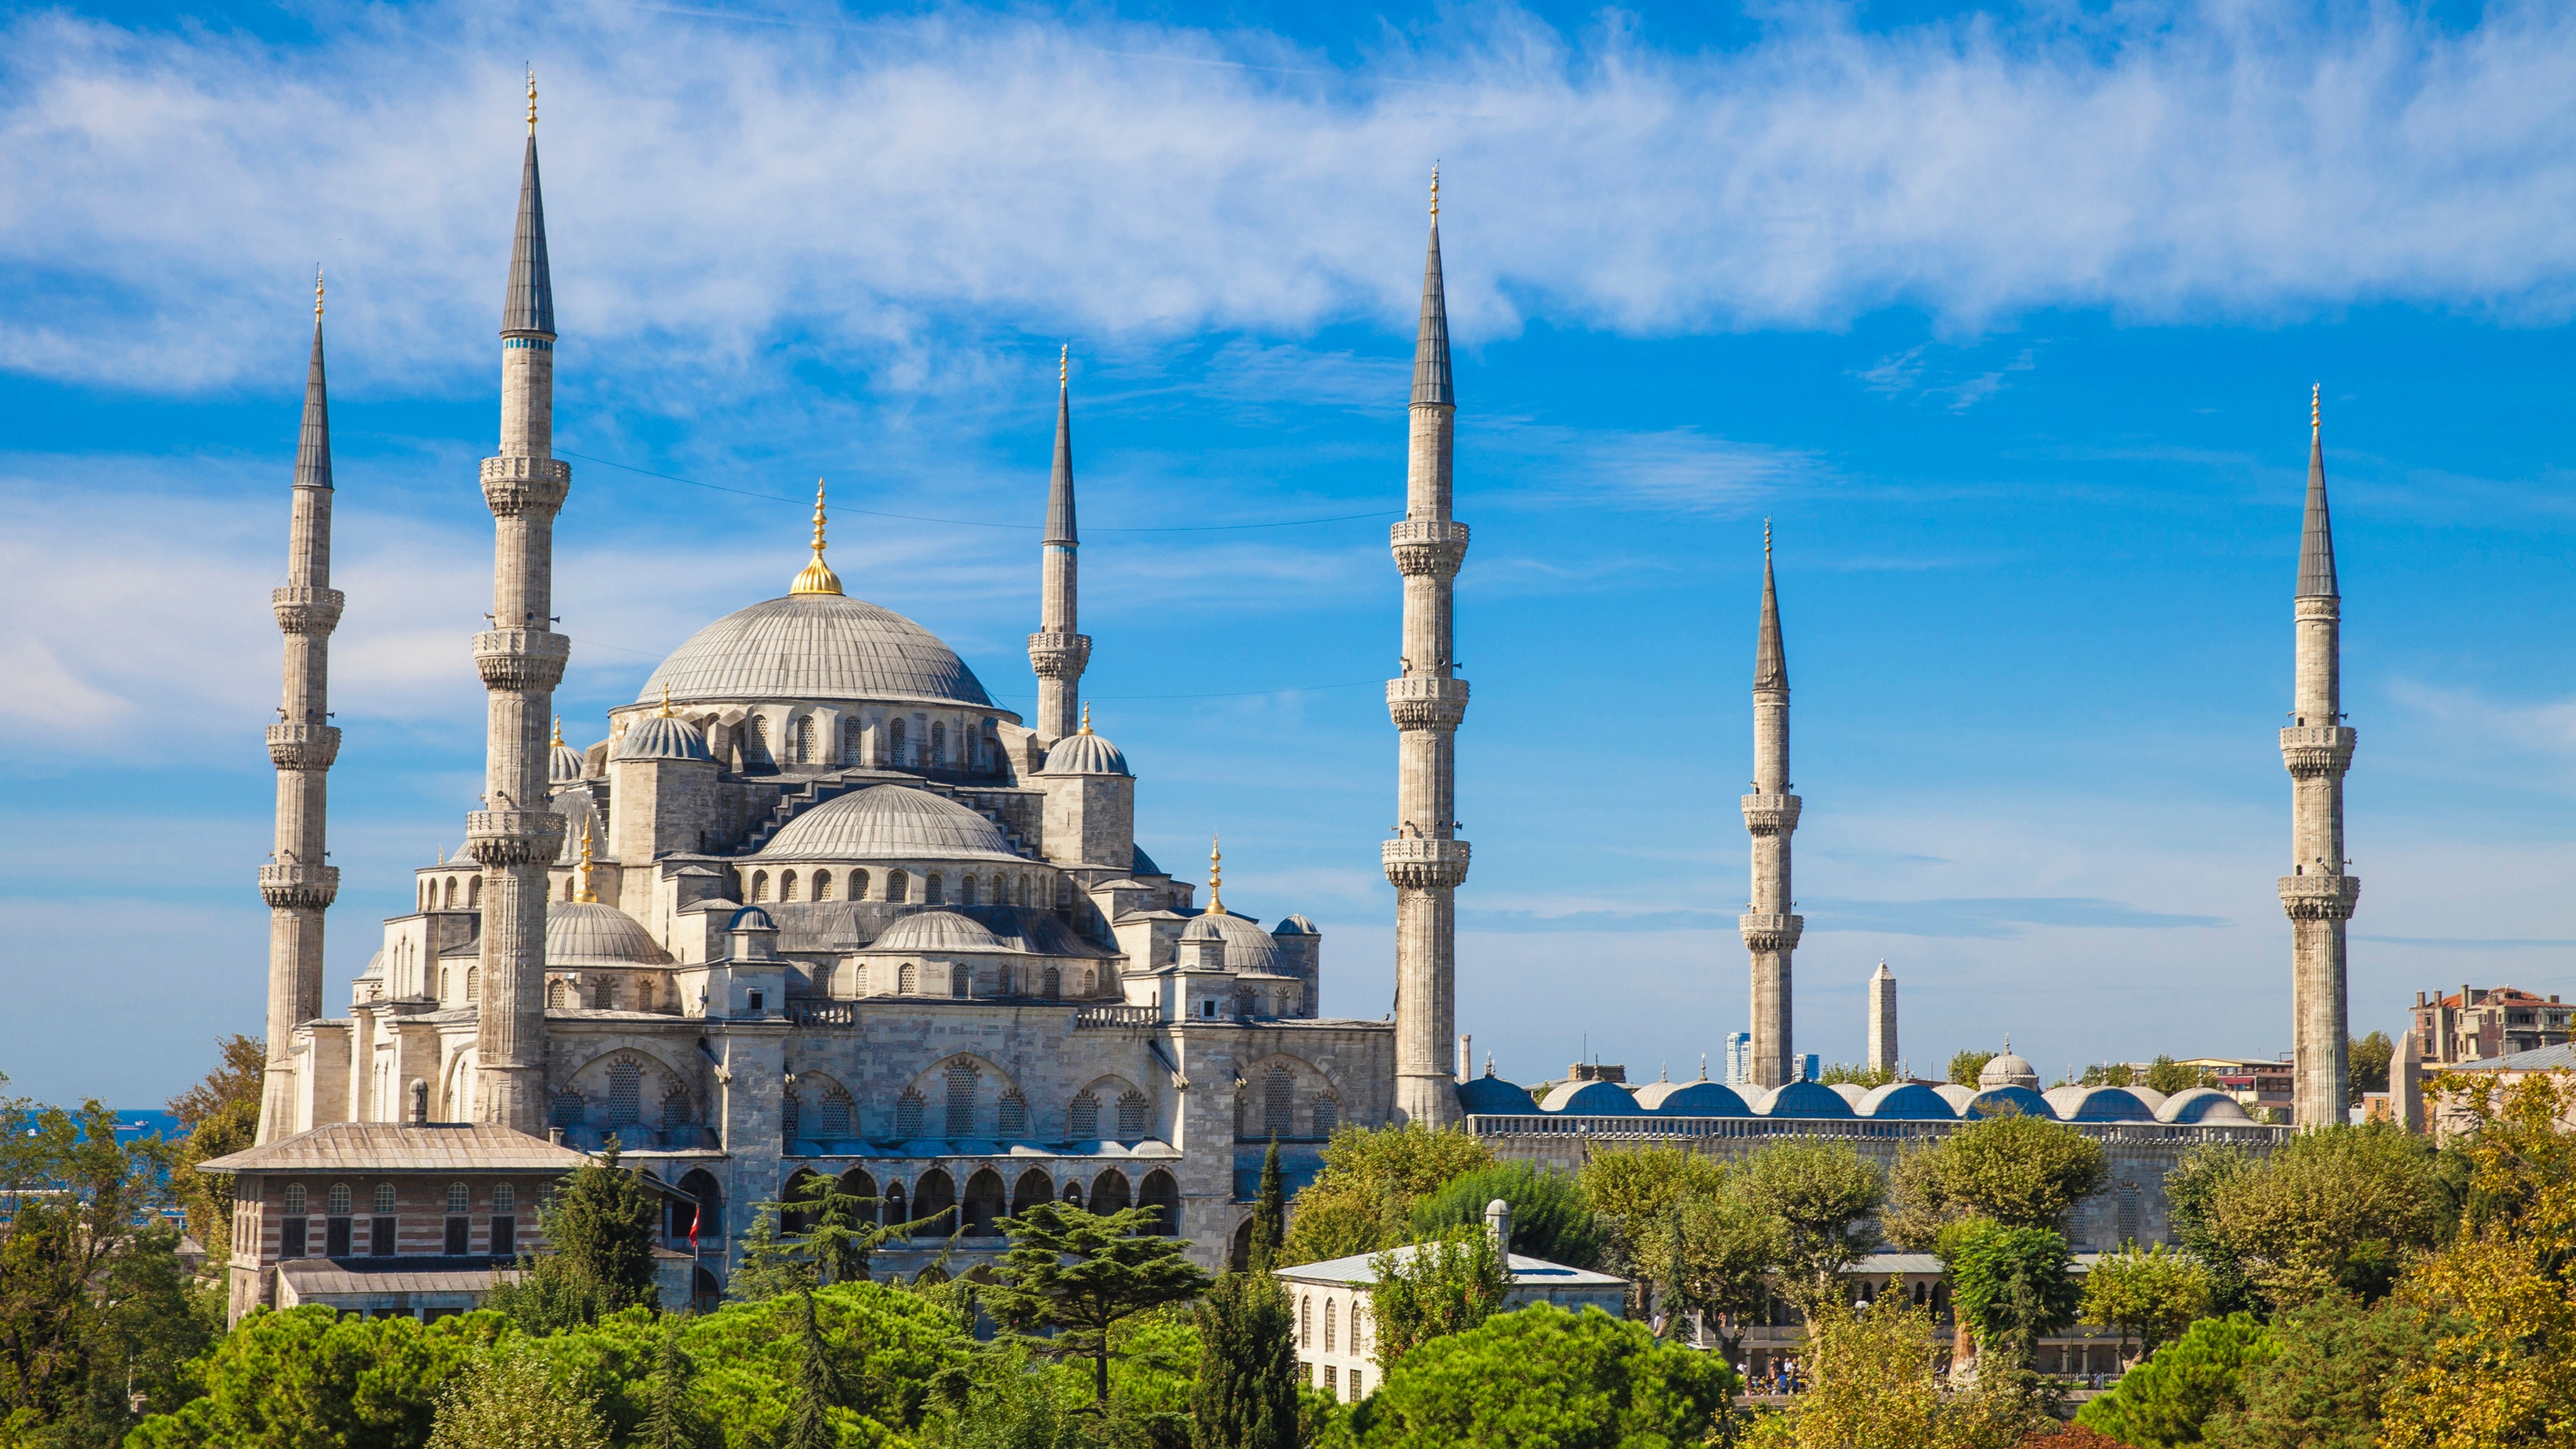 Sultan Ahmed Blue Mosque Istanbul Turkey  Manzara Dini mimari Camiler